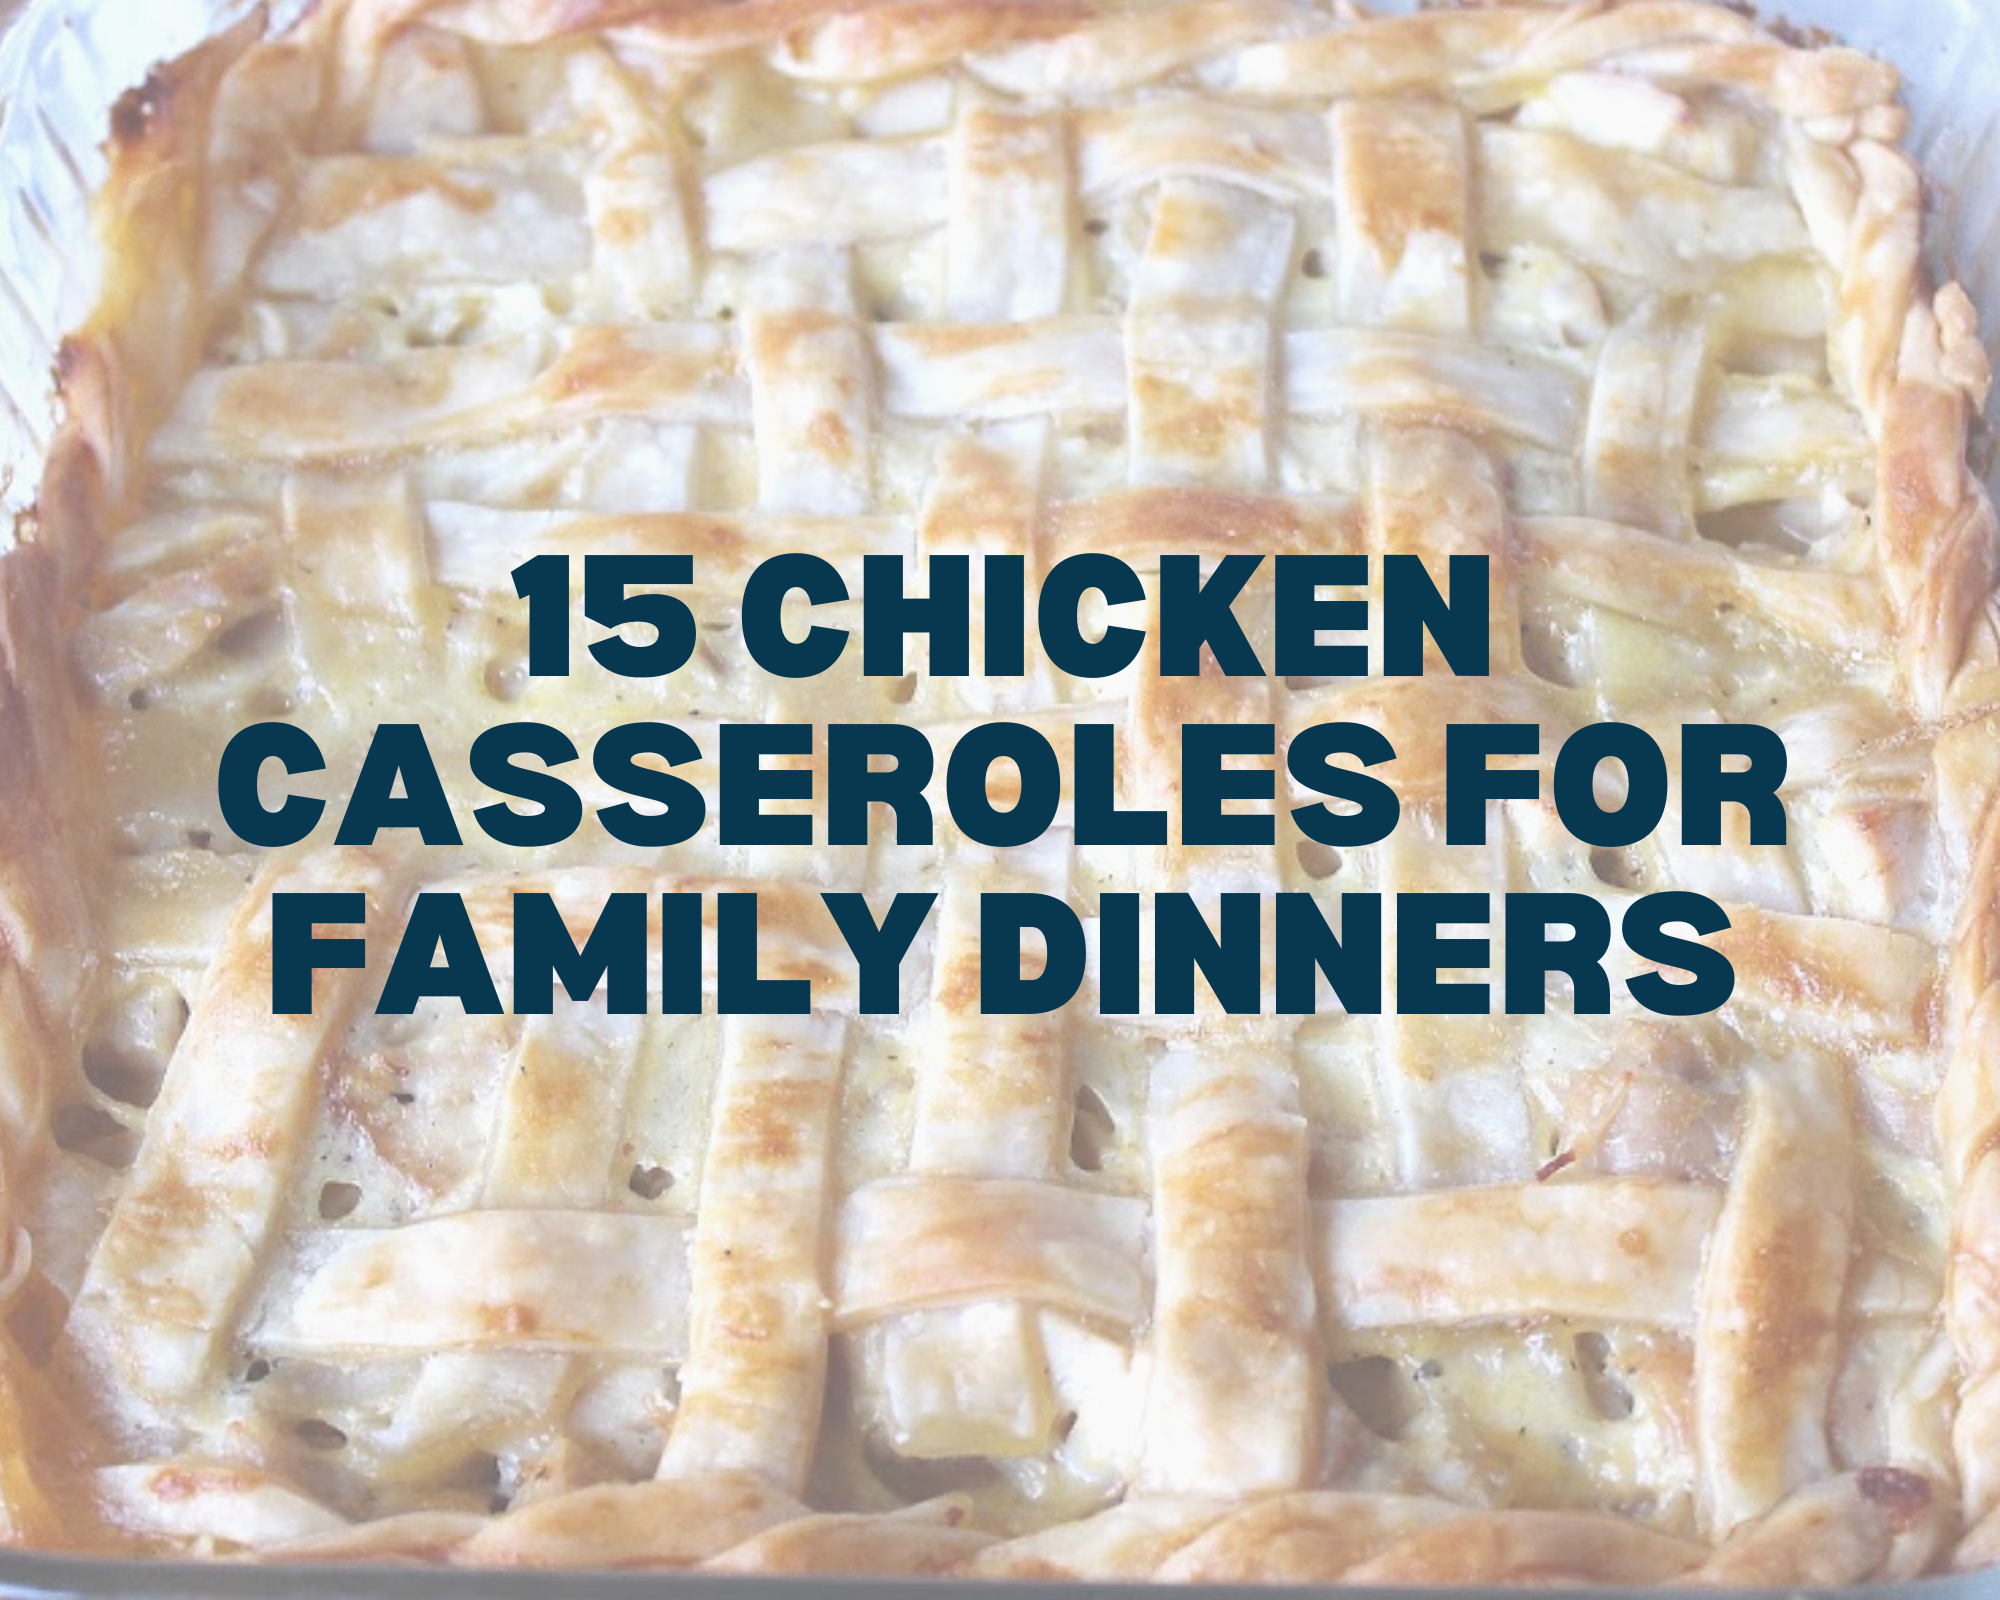 15 Chicken casserole recipes